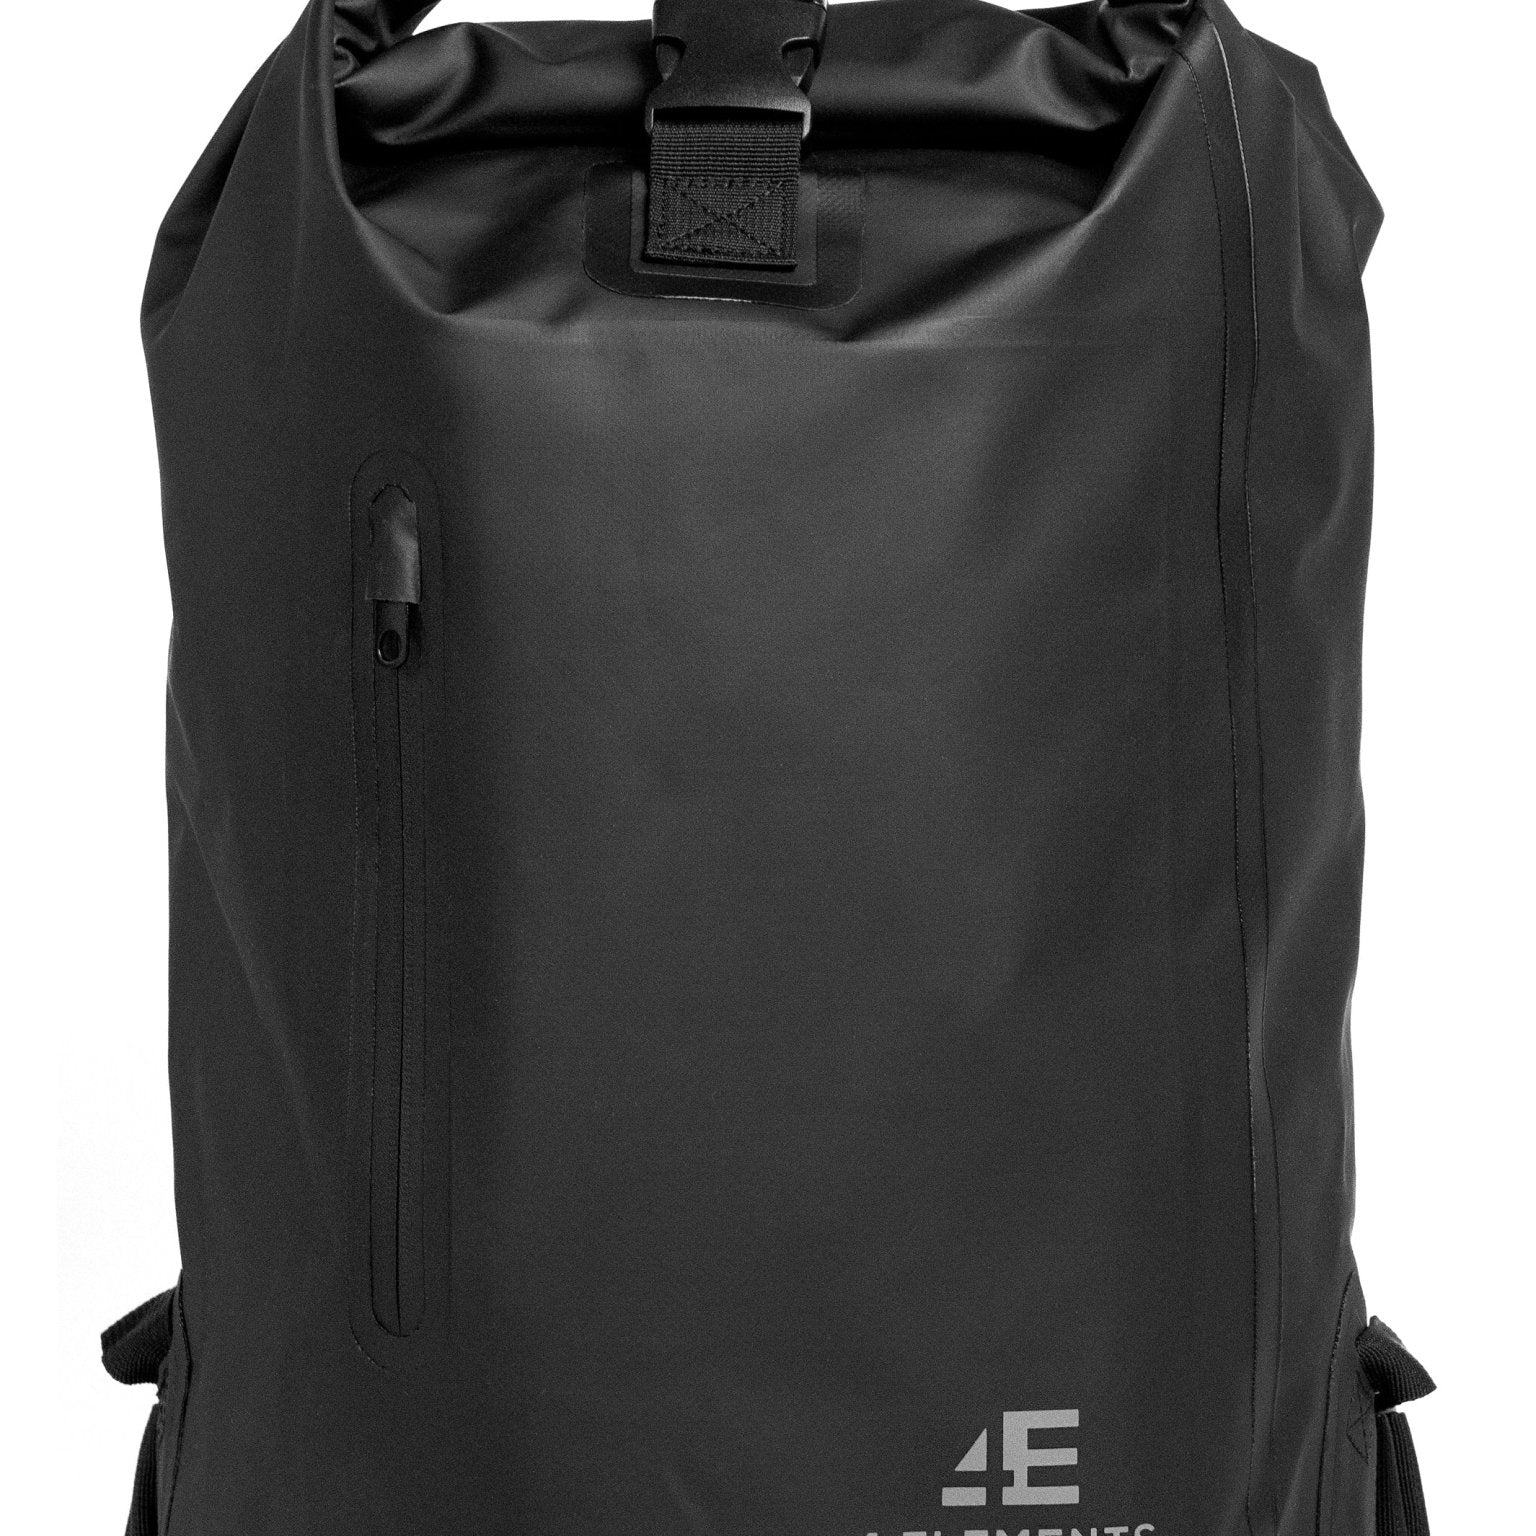 4elementsclothing4 Elements Clothing4 Elements - Waterproof bag and Dry Bag Roll Top waterproof Rucksack, Wet bag & Hiking, waters sports or camping bag, 30L drybagBag4EC-DBG30-BK